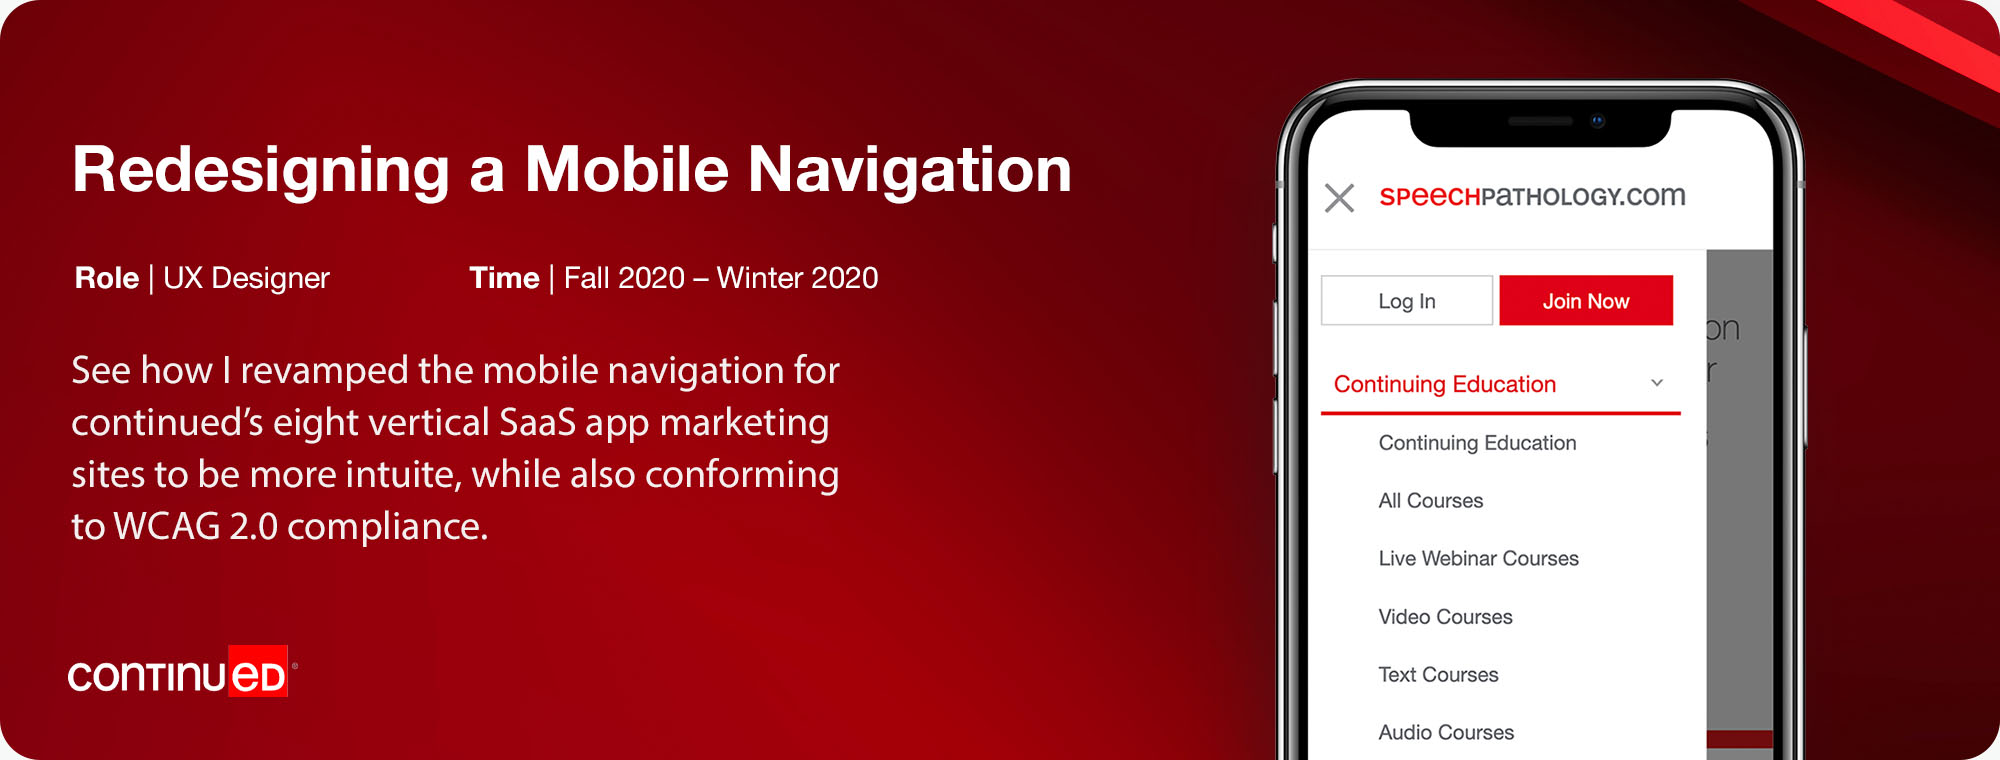 Redesigning a Mobile Navigation